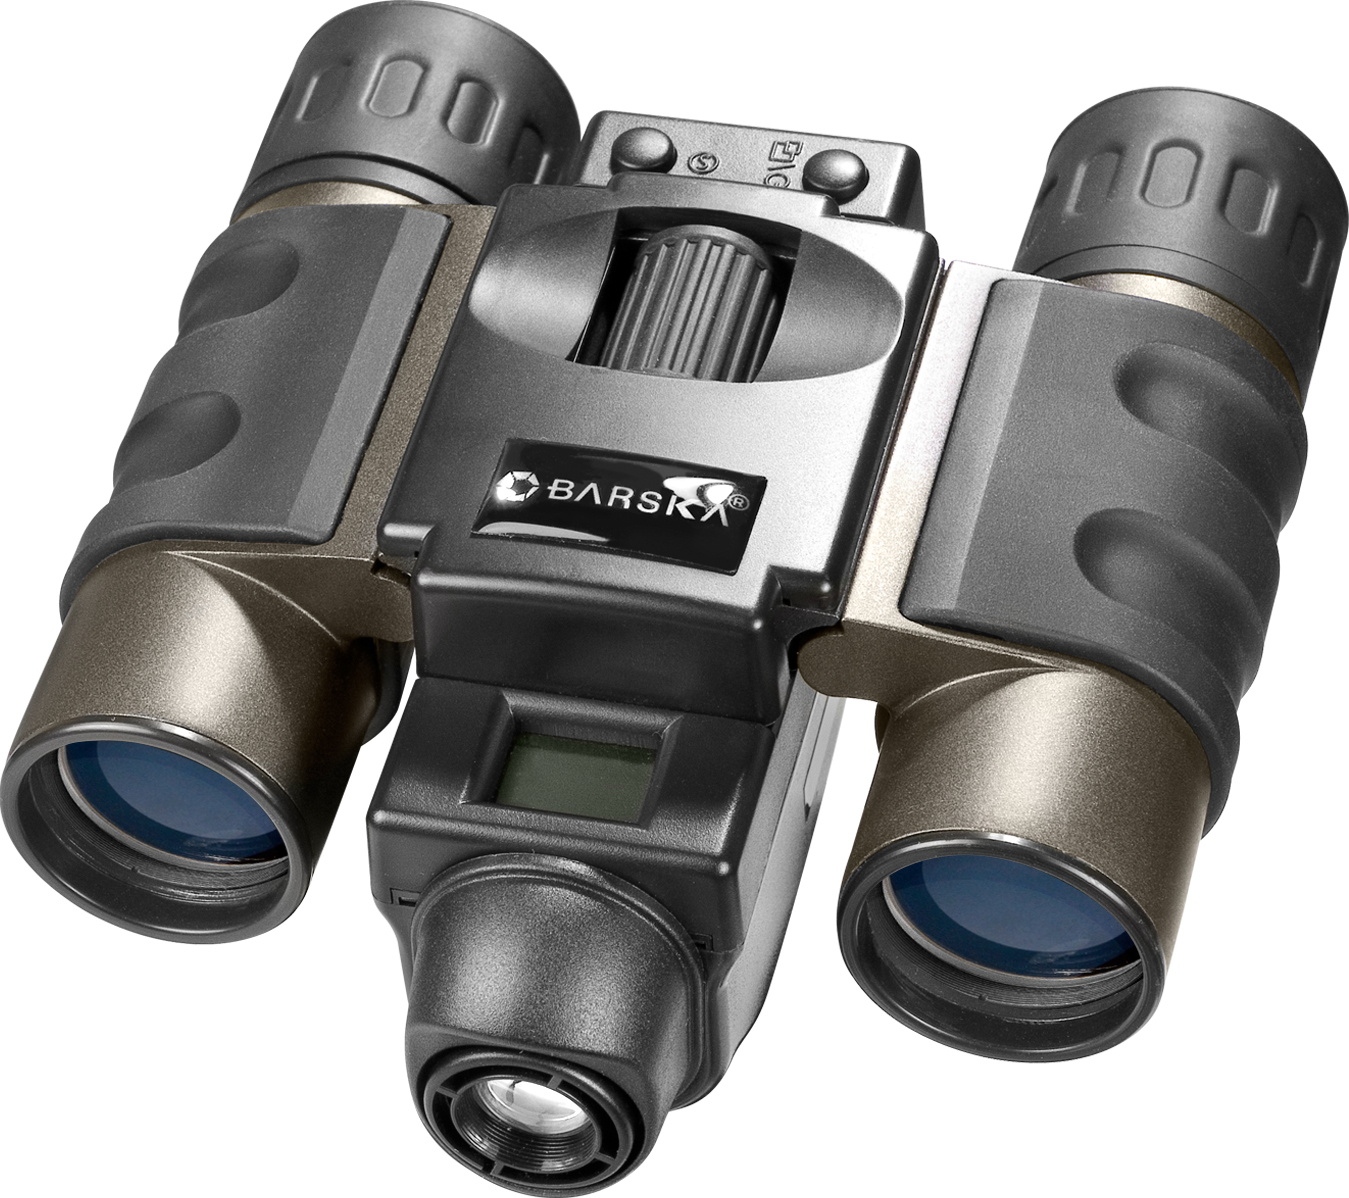 5 Best Binoculars With Camera Reviews of 2020 - BestAdvisor.com